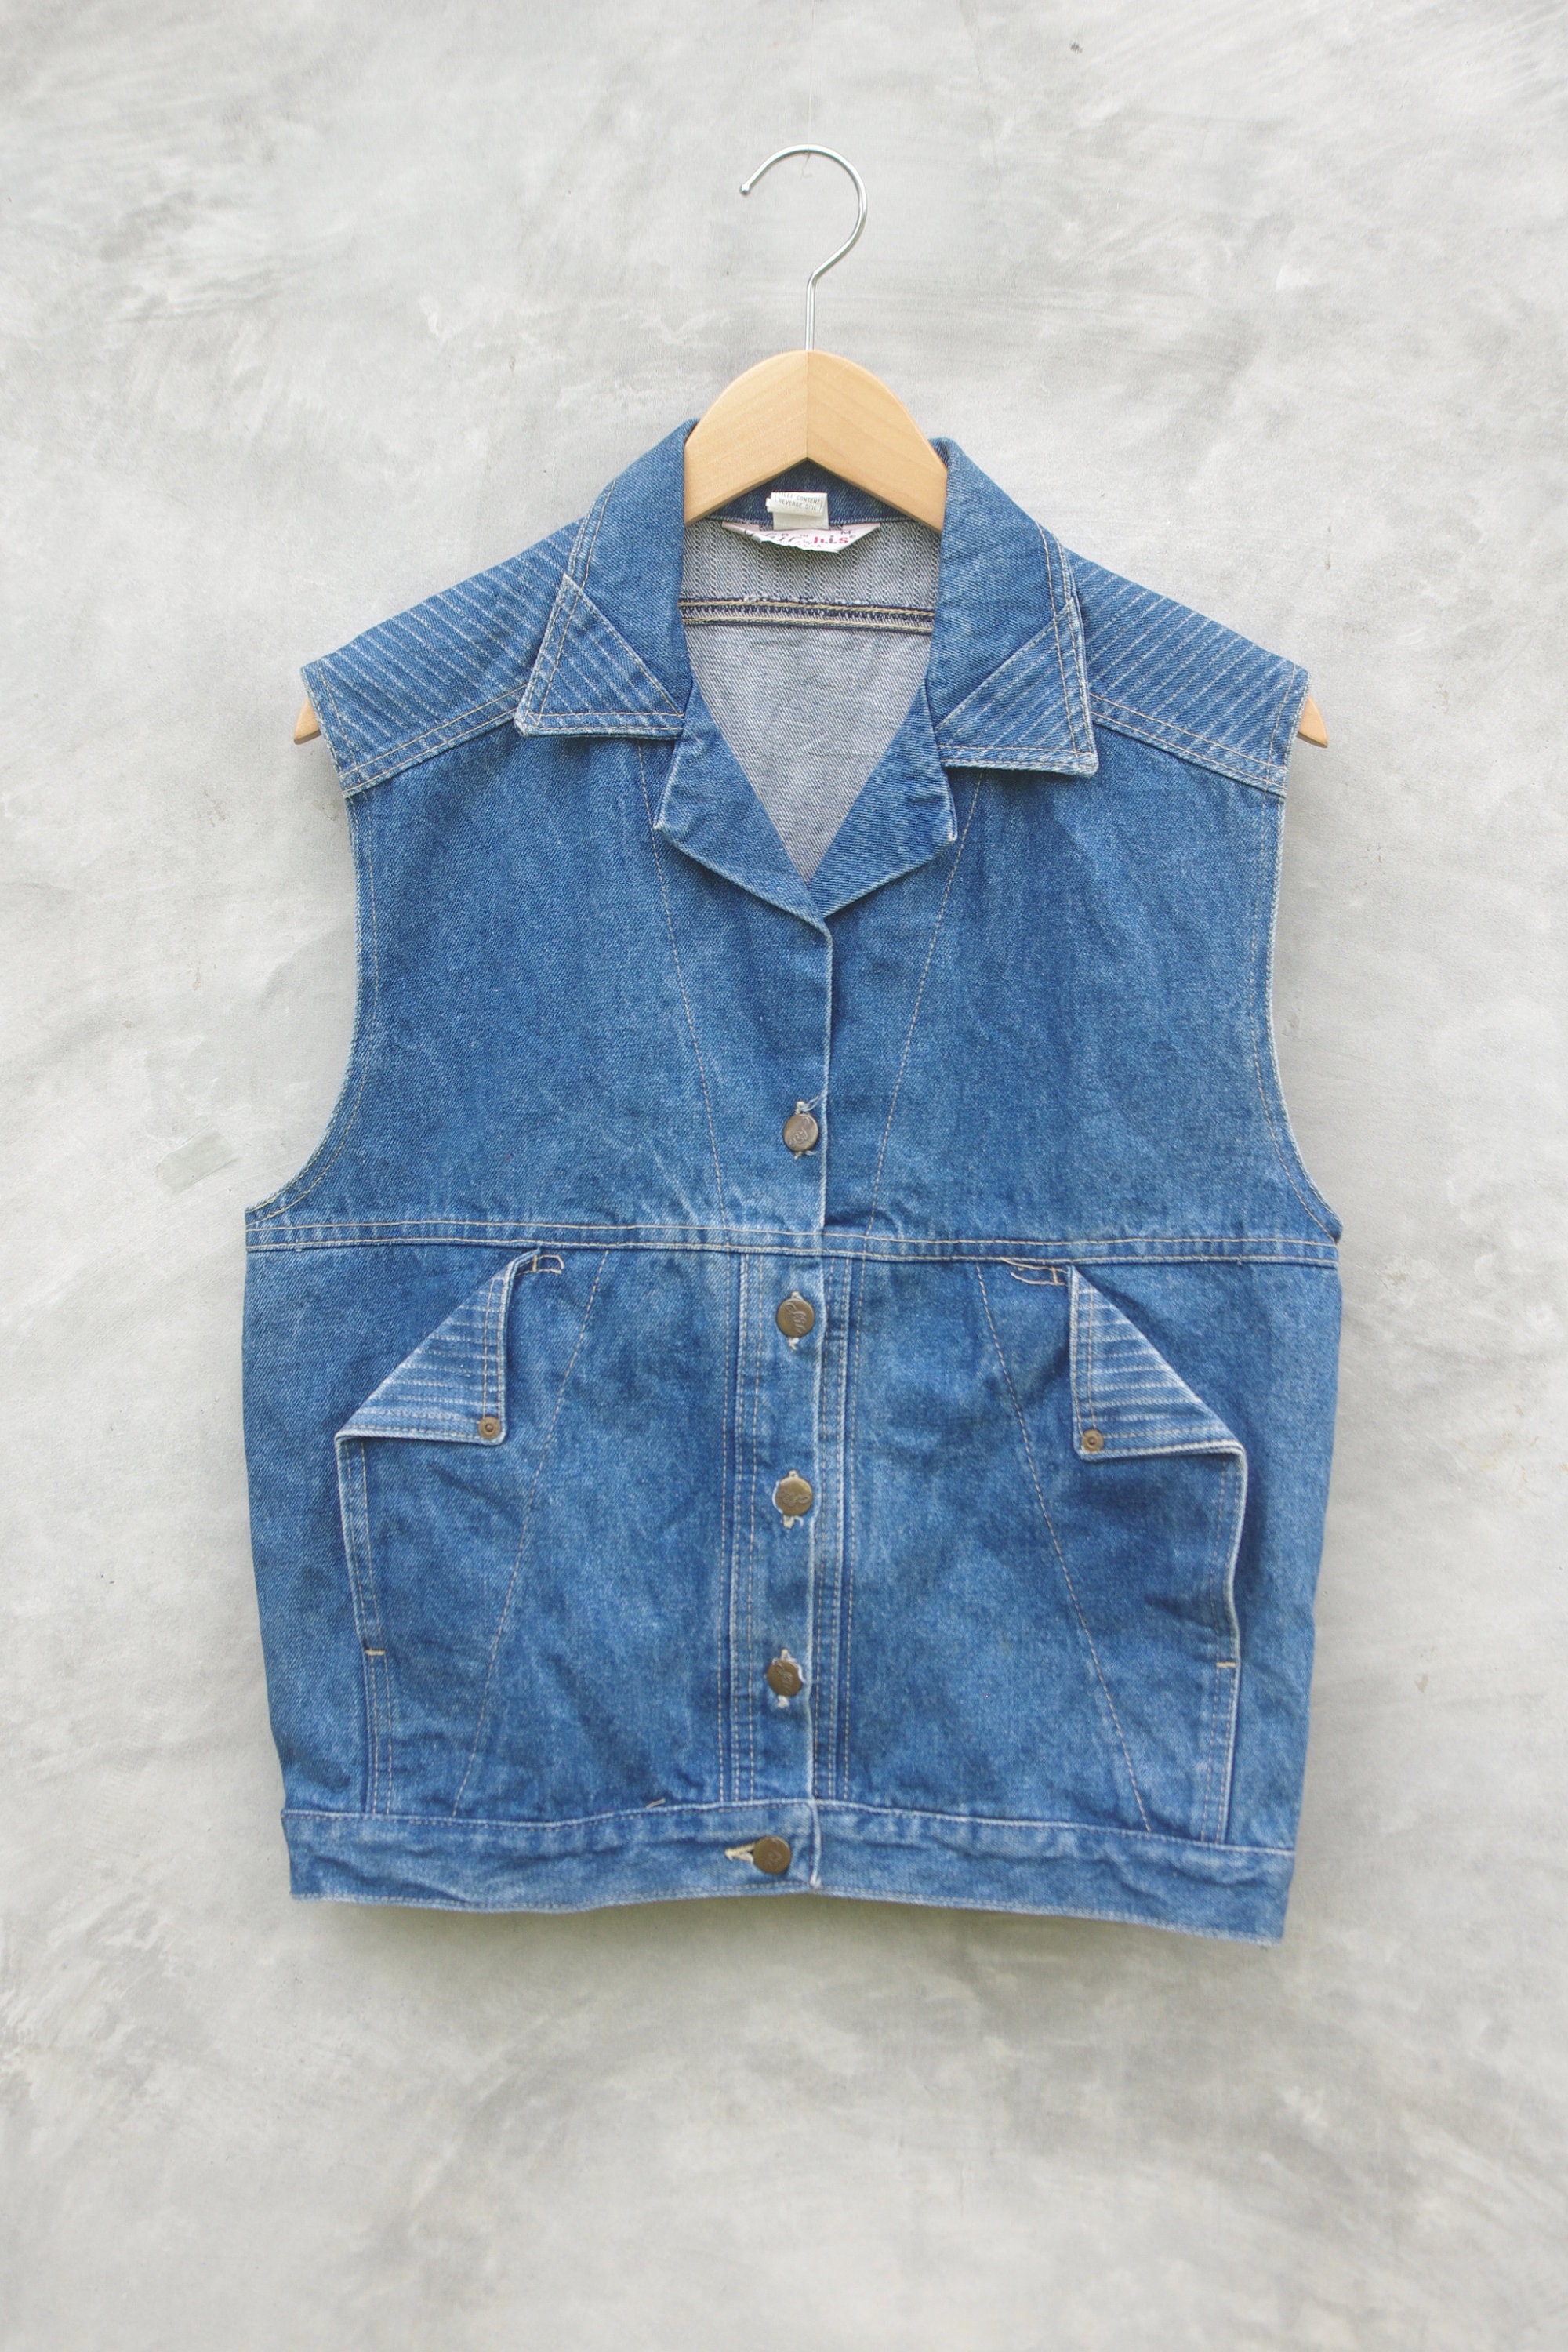 Vintage Vest Blue Janschic by H.i.s Made Usasize Mvestvest - Etsy